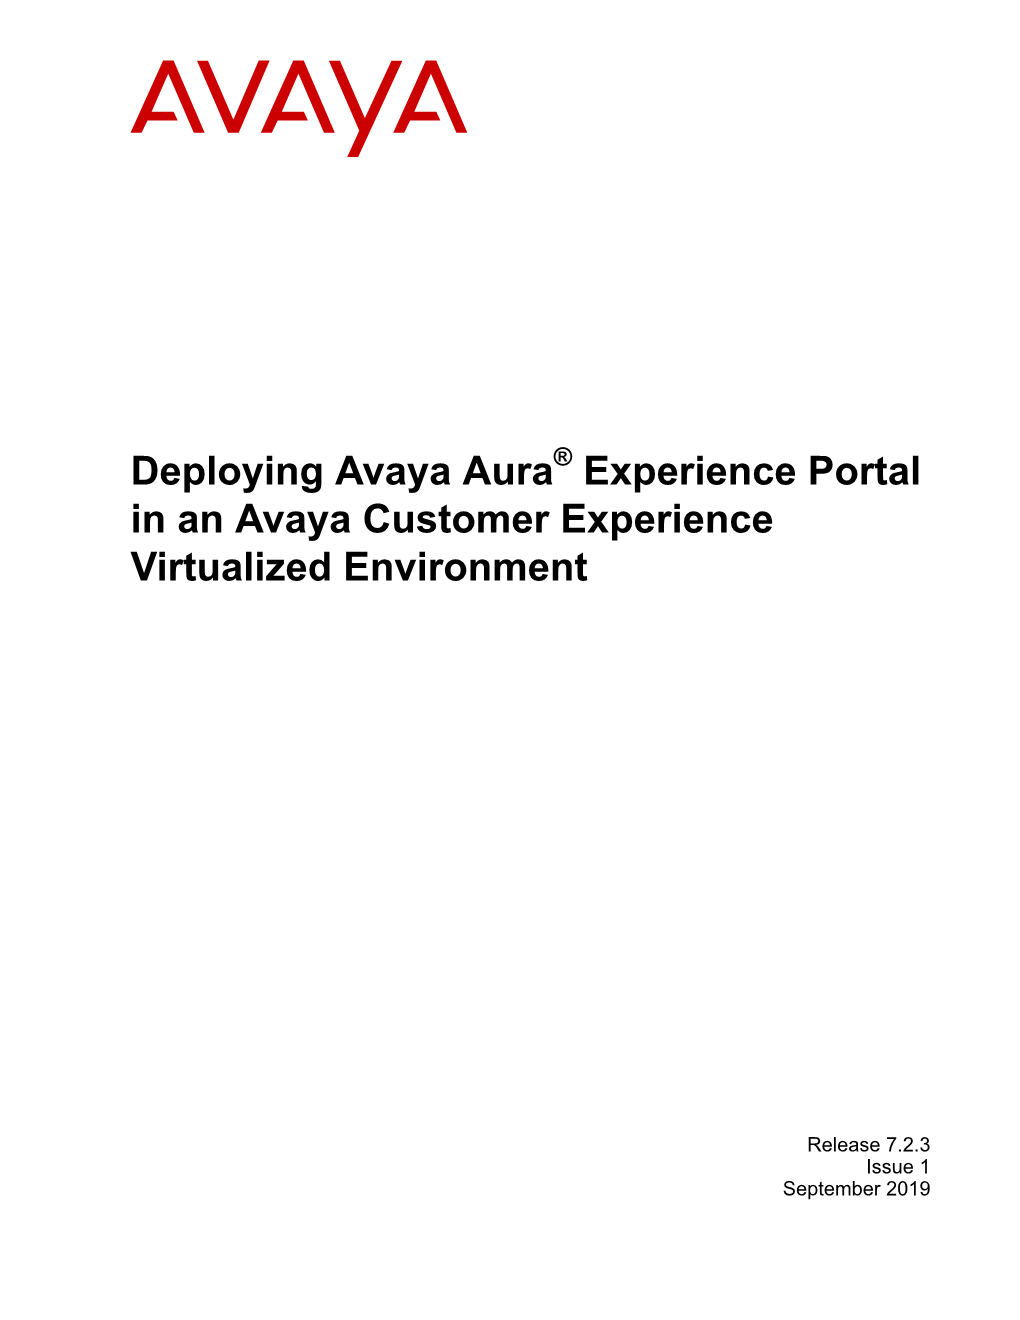 Deploying Avaya Aura Experience Portal in An